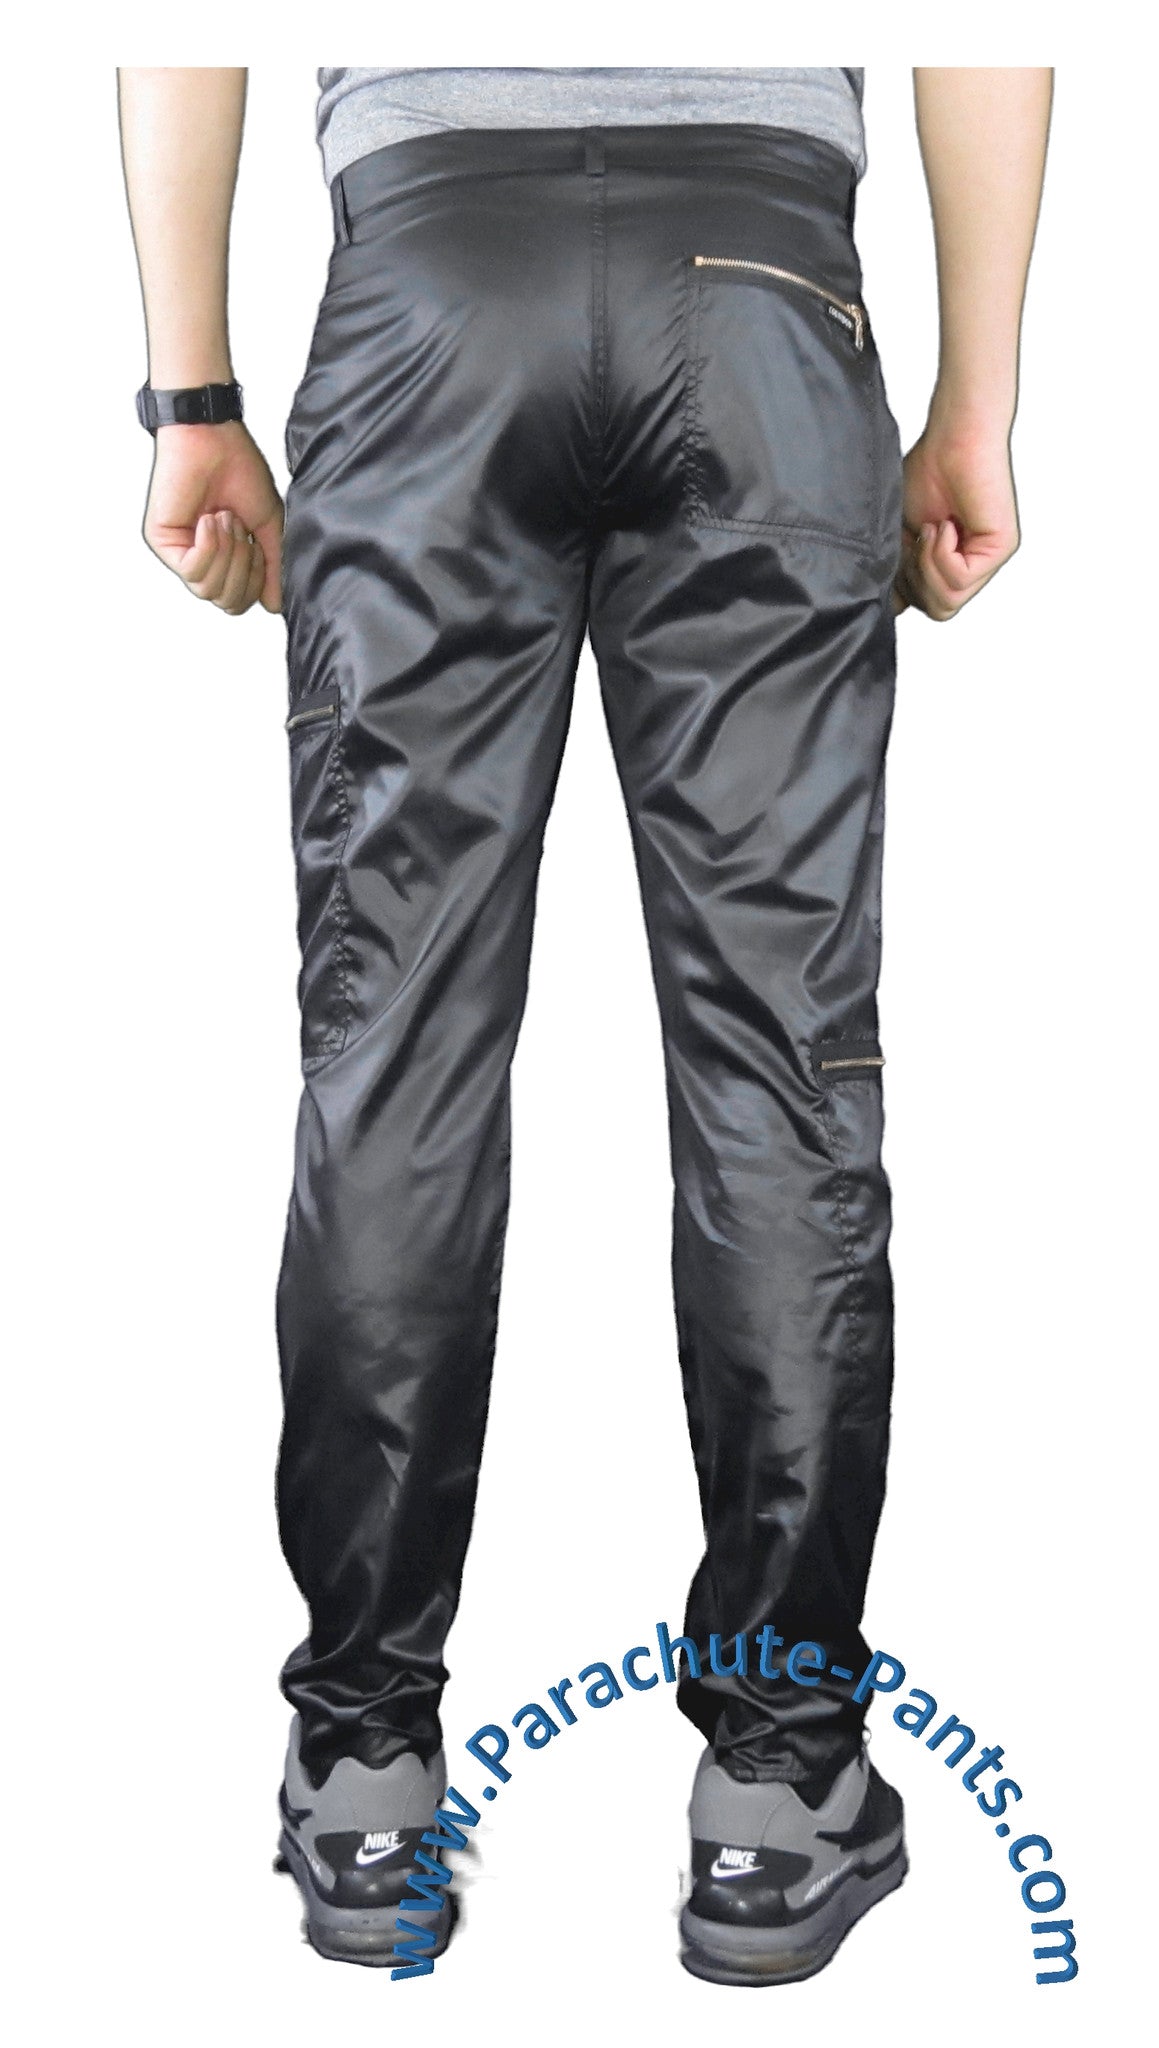 Countdown Black Shiny Nylon Parachute Pants with Steel Zippers 